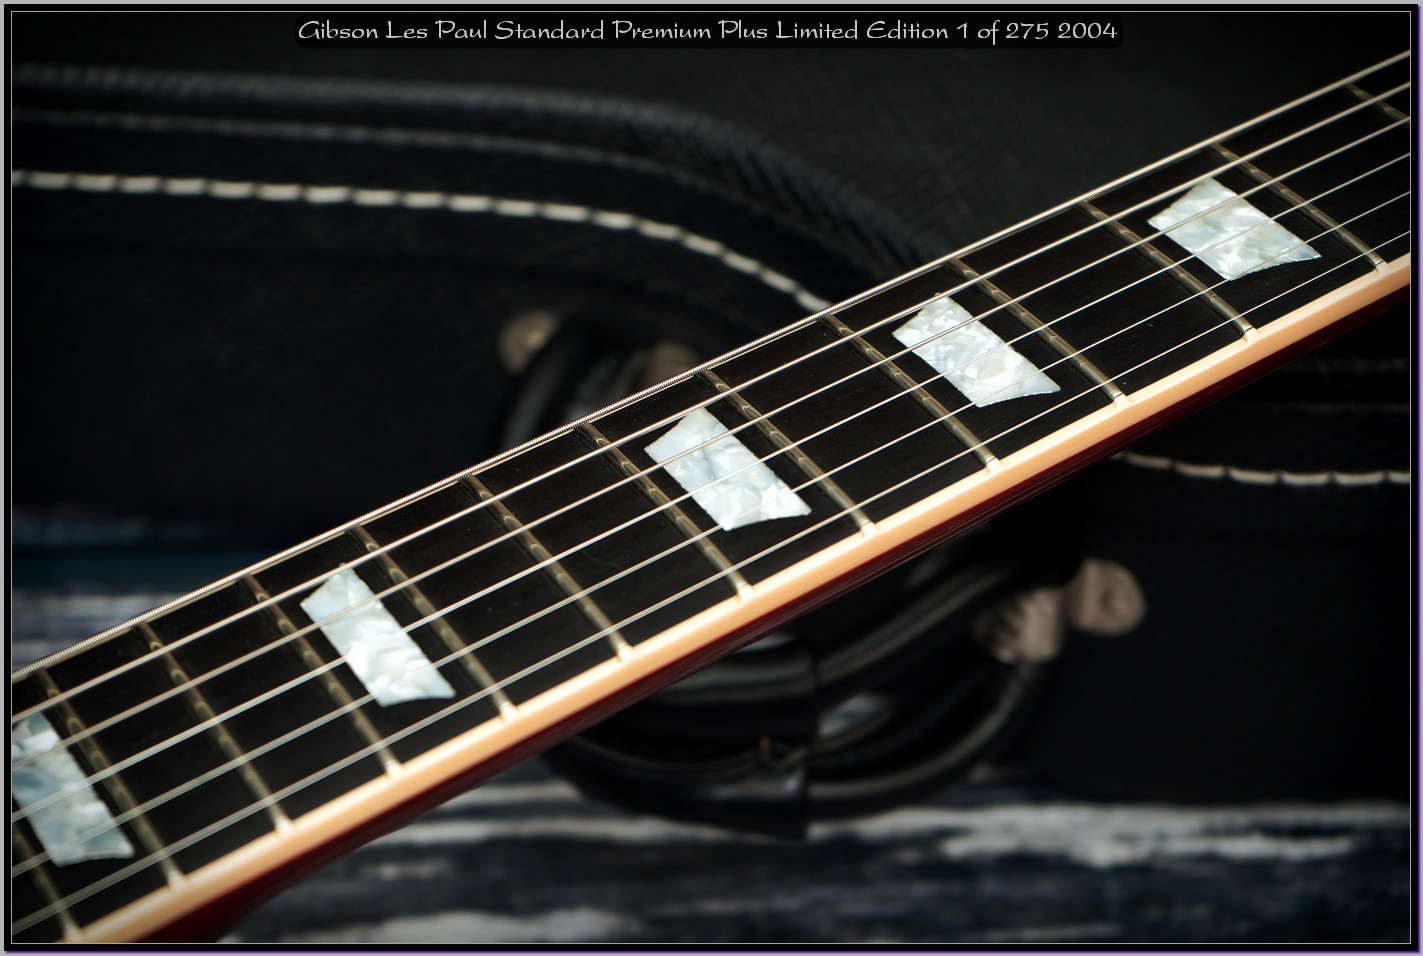 Gibson Les Paul Standard Premium Plus Limited Edition 1 of 275 2004 06b_x1400.jpg